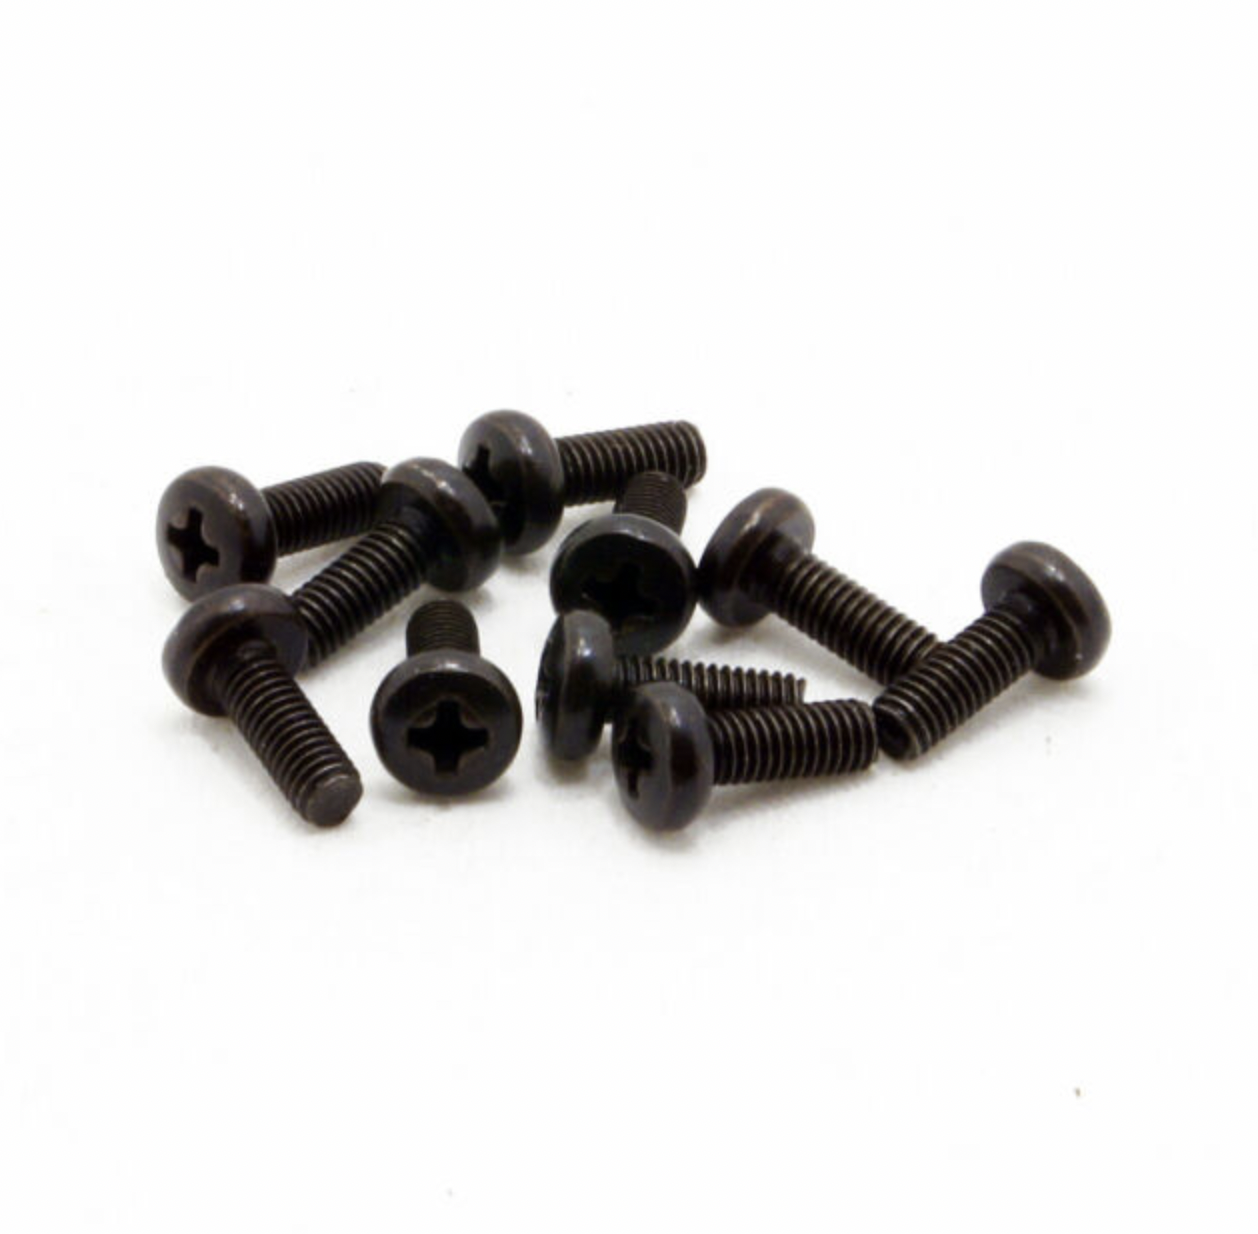 100pcs of 8mm M2 Black pan head nylon Screws